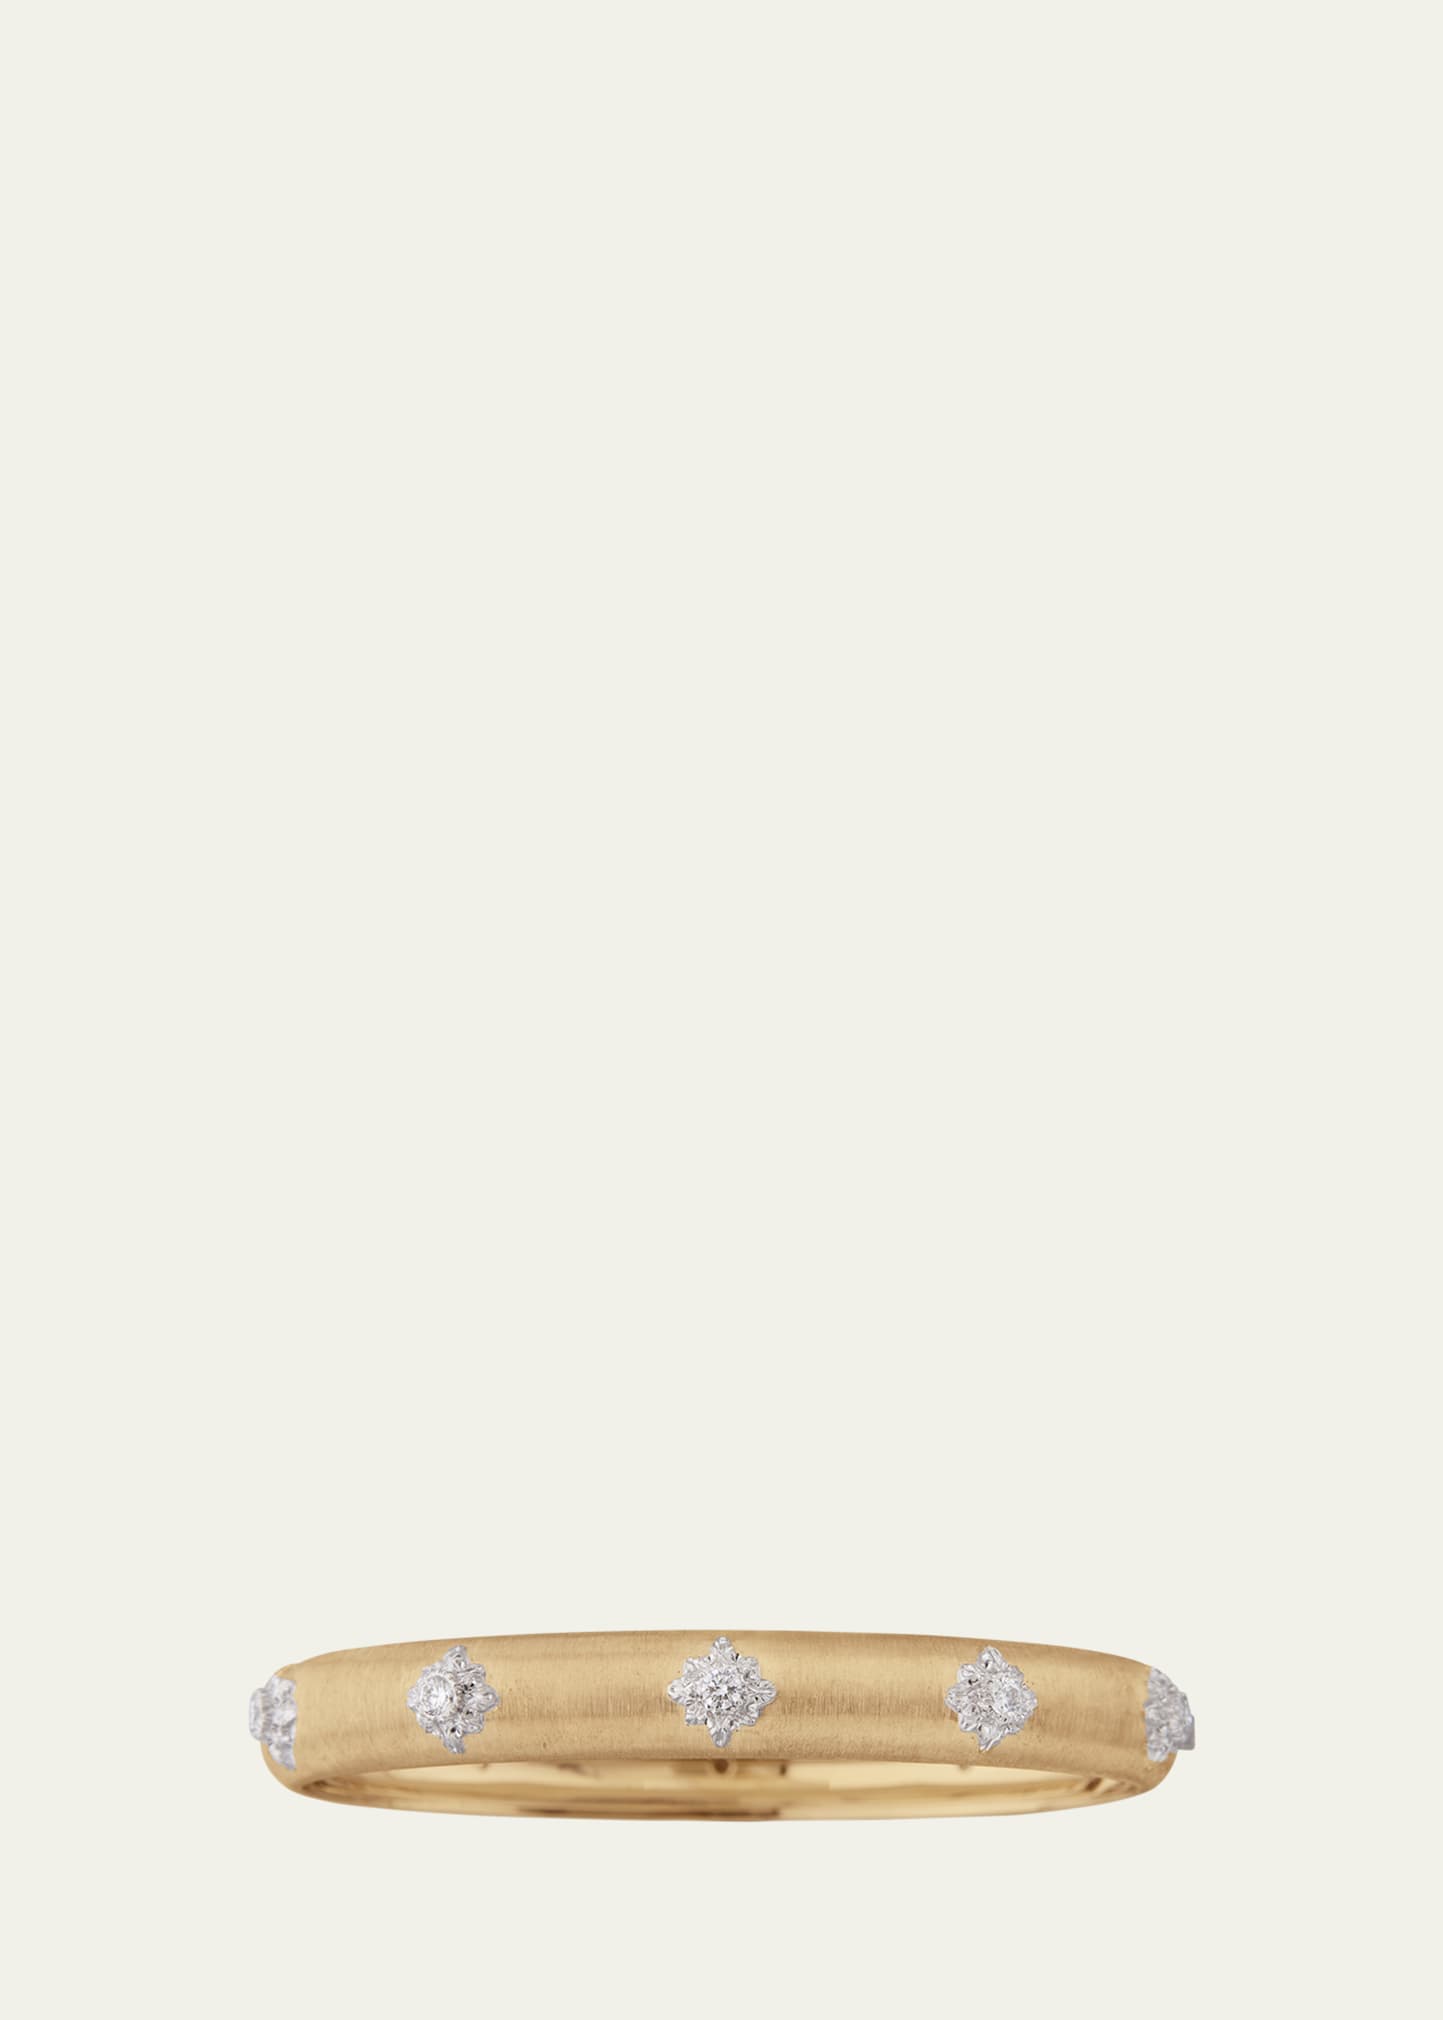 Buccellati Macri Bombe 18k Gold Diamond Cuff Bracelet